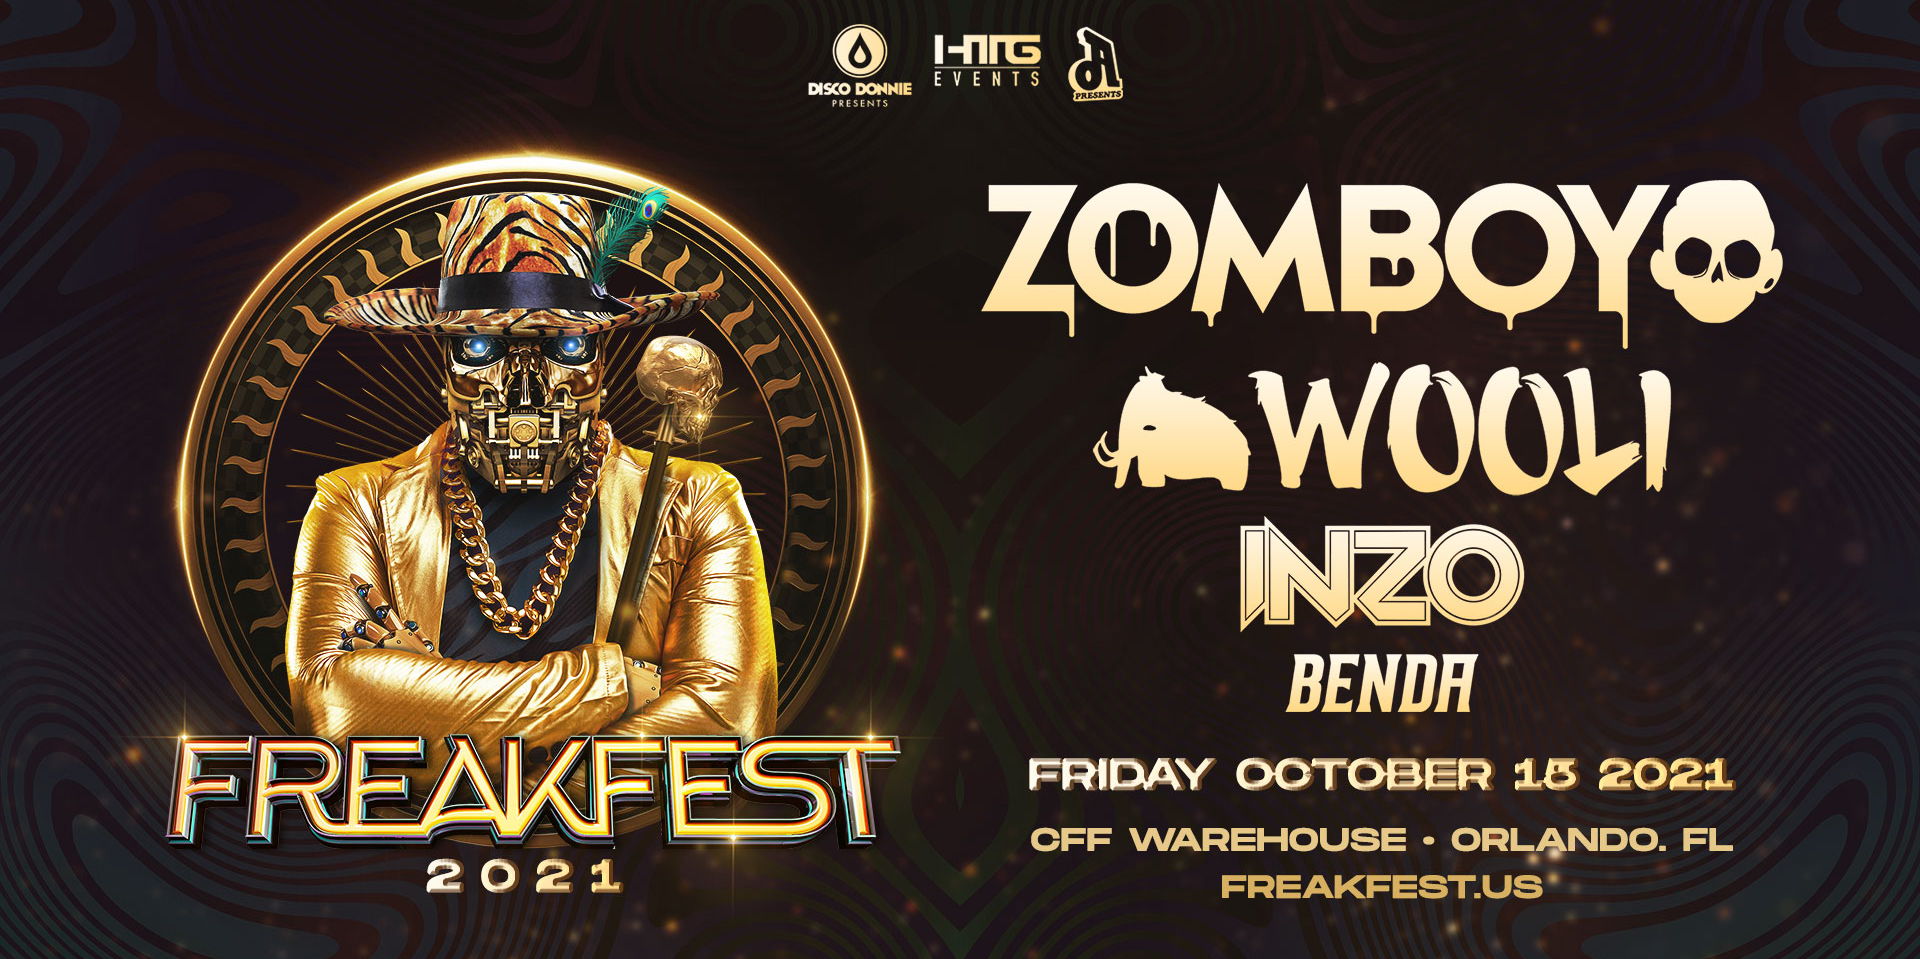 Freakfest promotional image